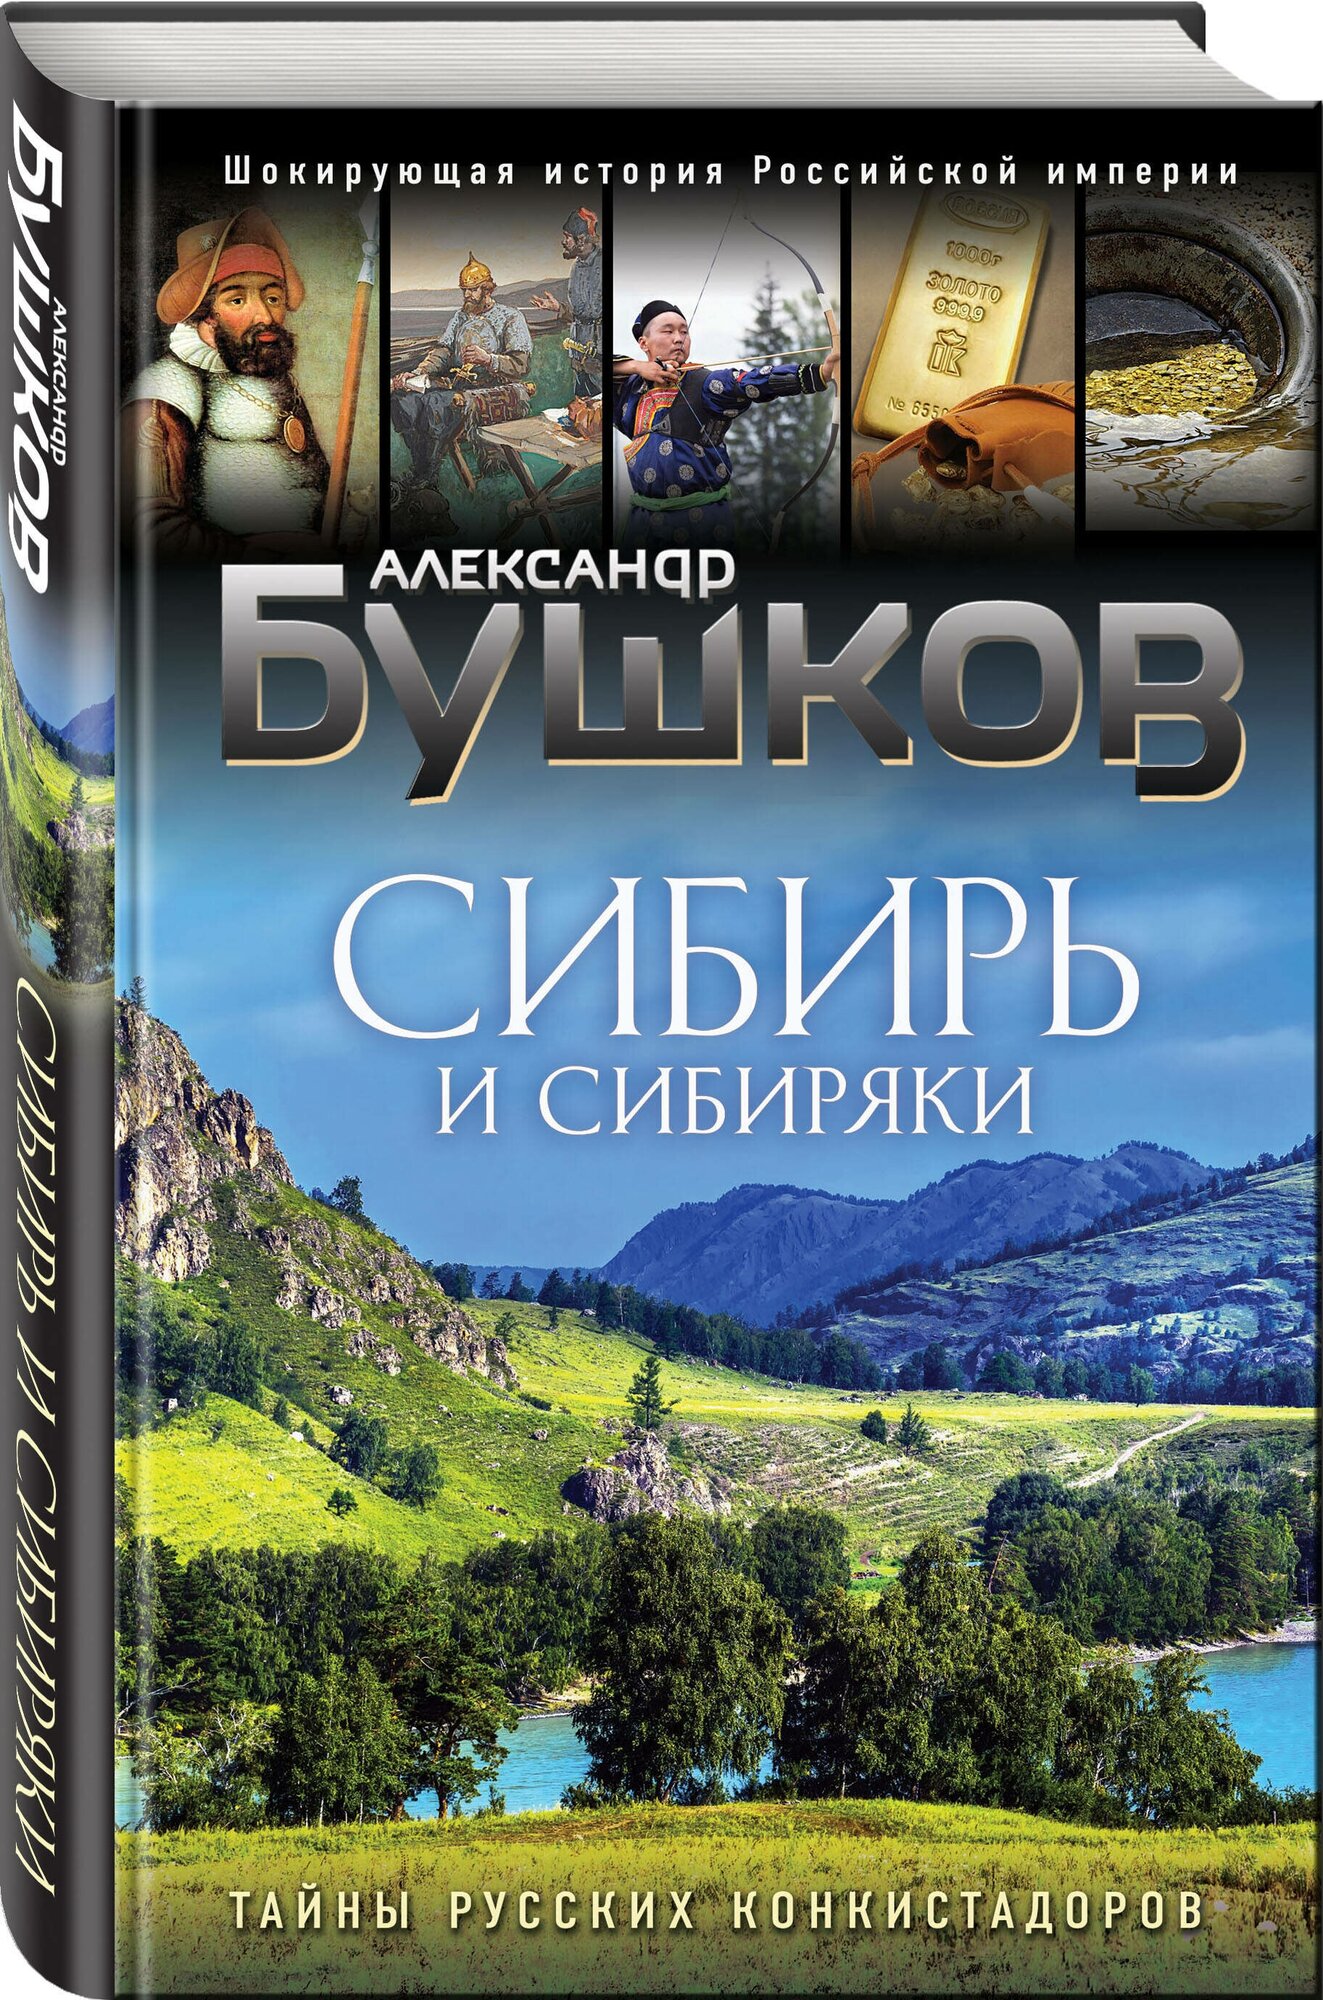 Сибирь и сибиряки (Бушков Александр Александрович) - фото №1